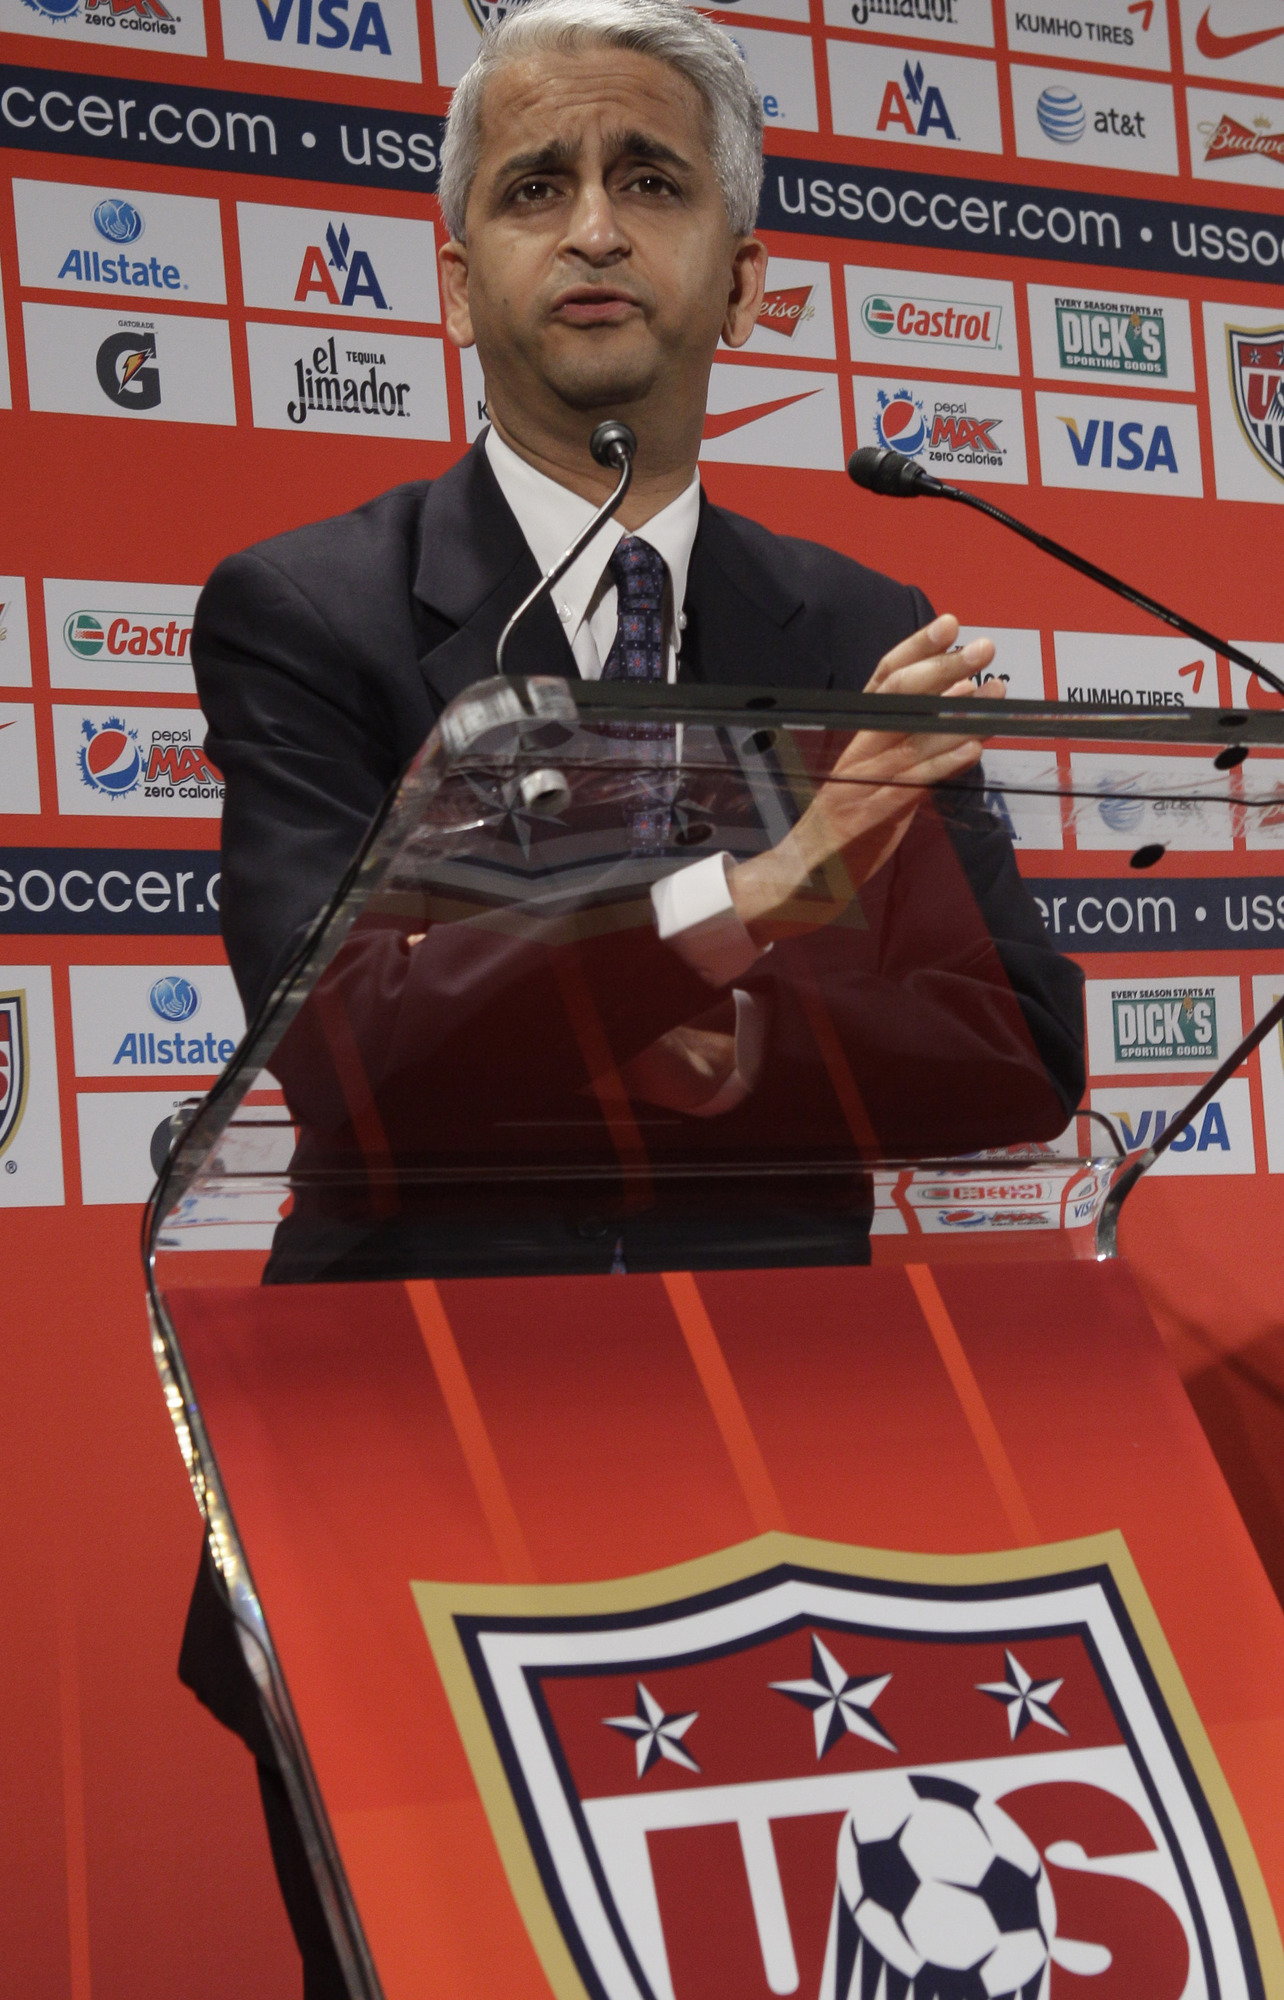 U.S. Soccer President Sunil Gulati